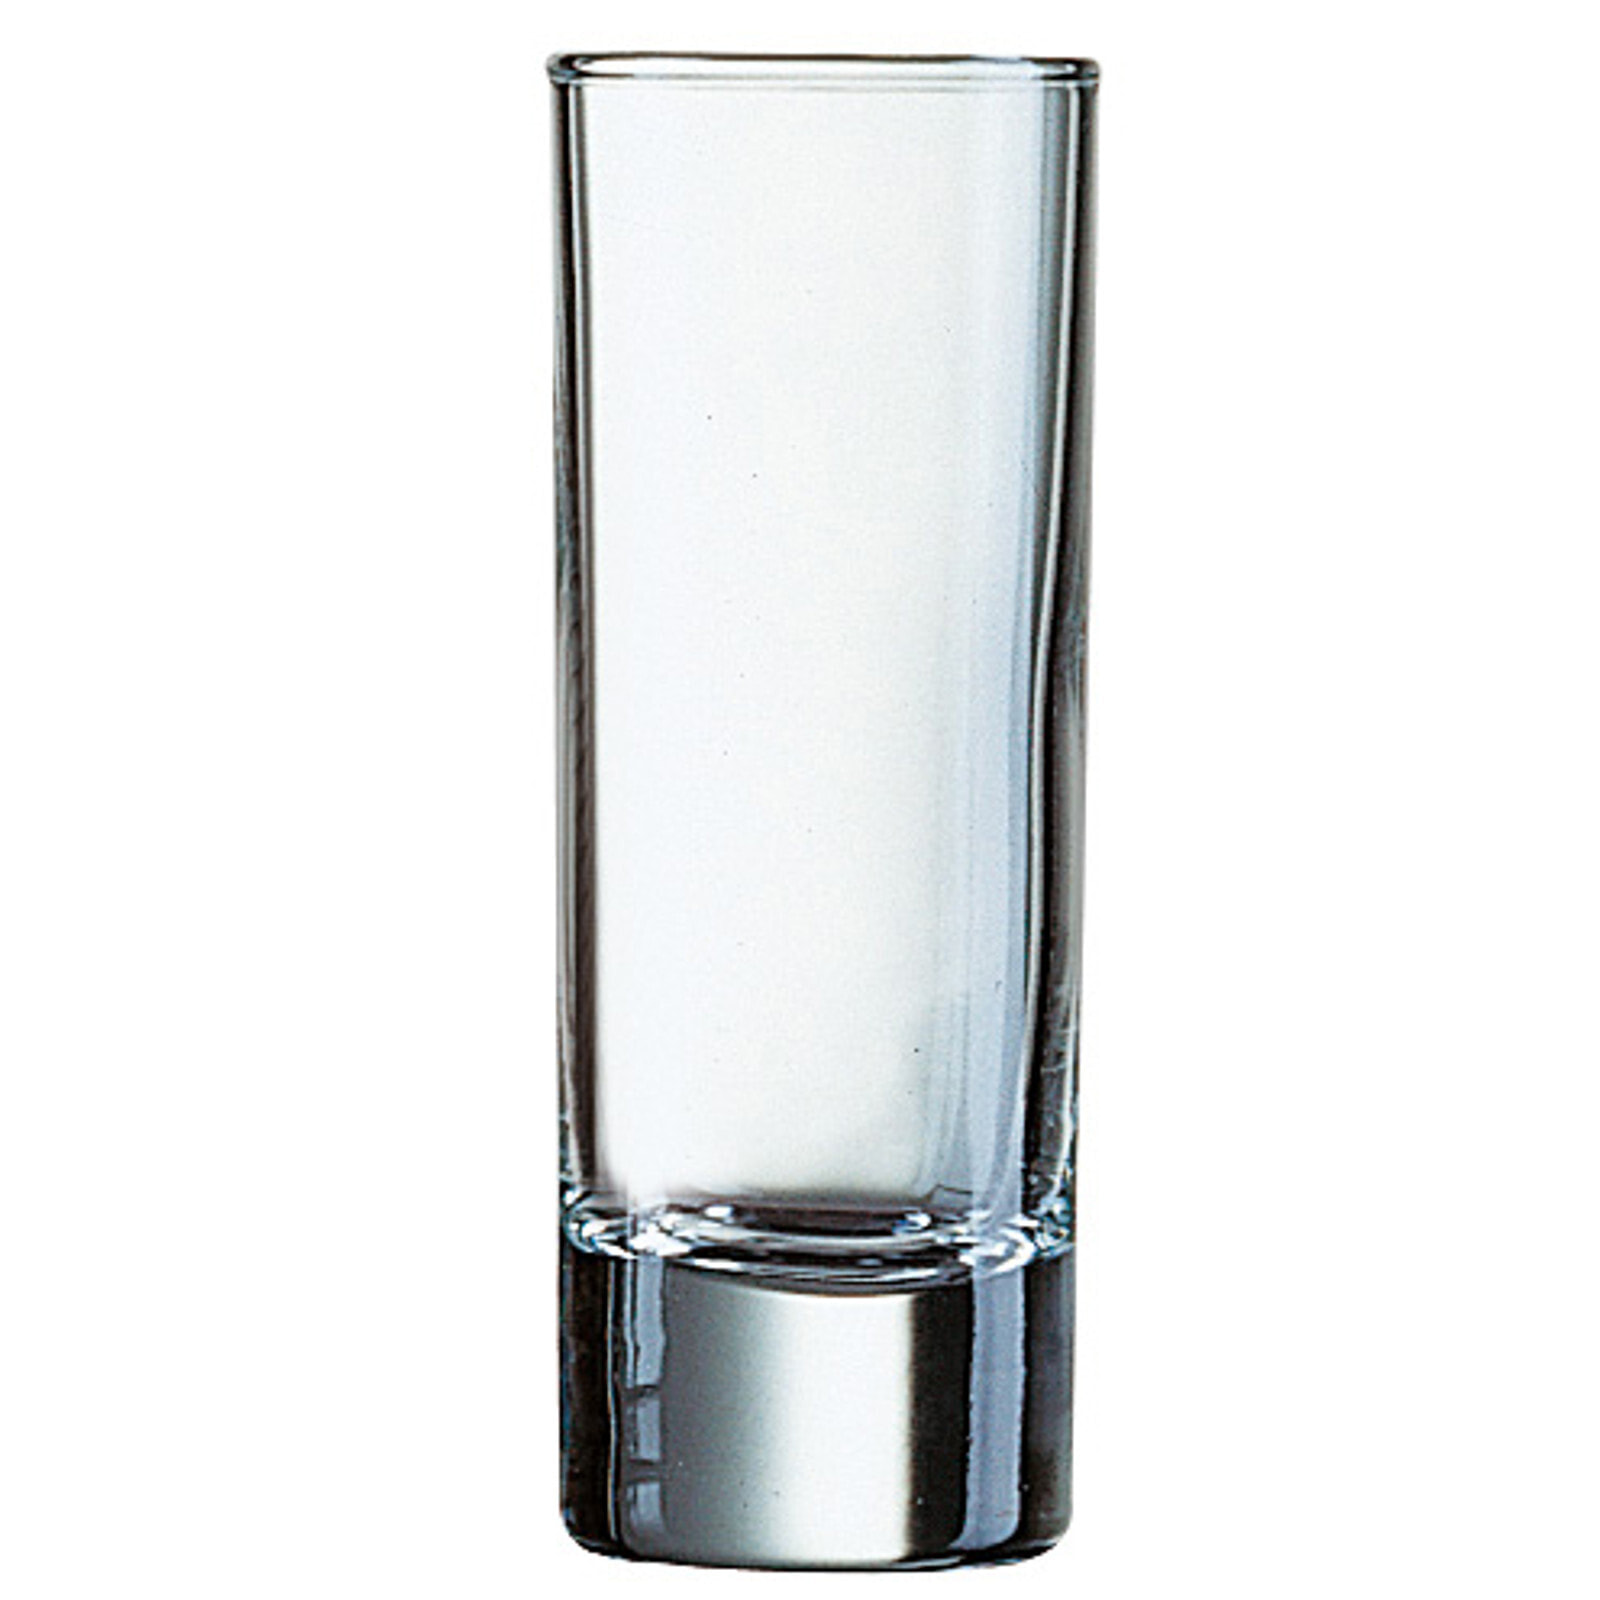 Arcoroc ISLANDE vodka glass, tempered glass 60ml, set of 12 - Hendi 40375